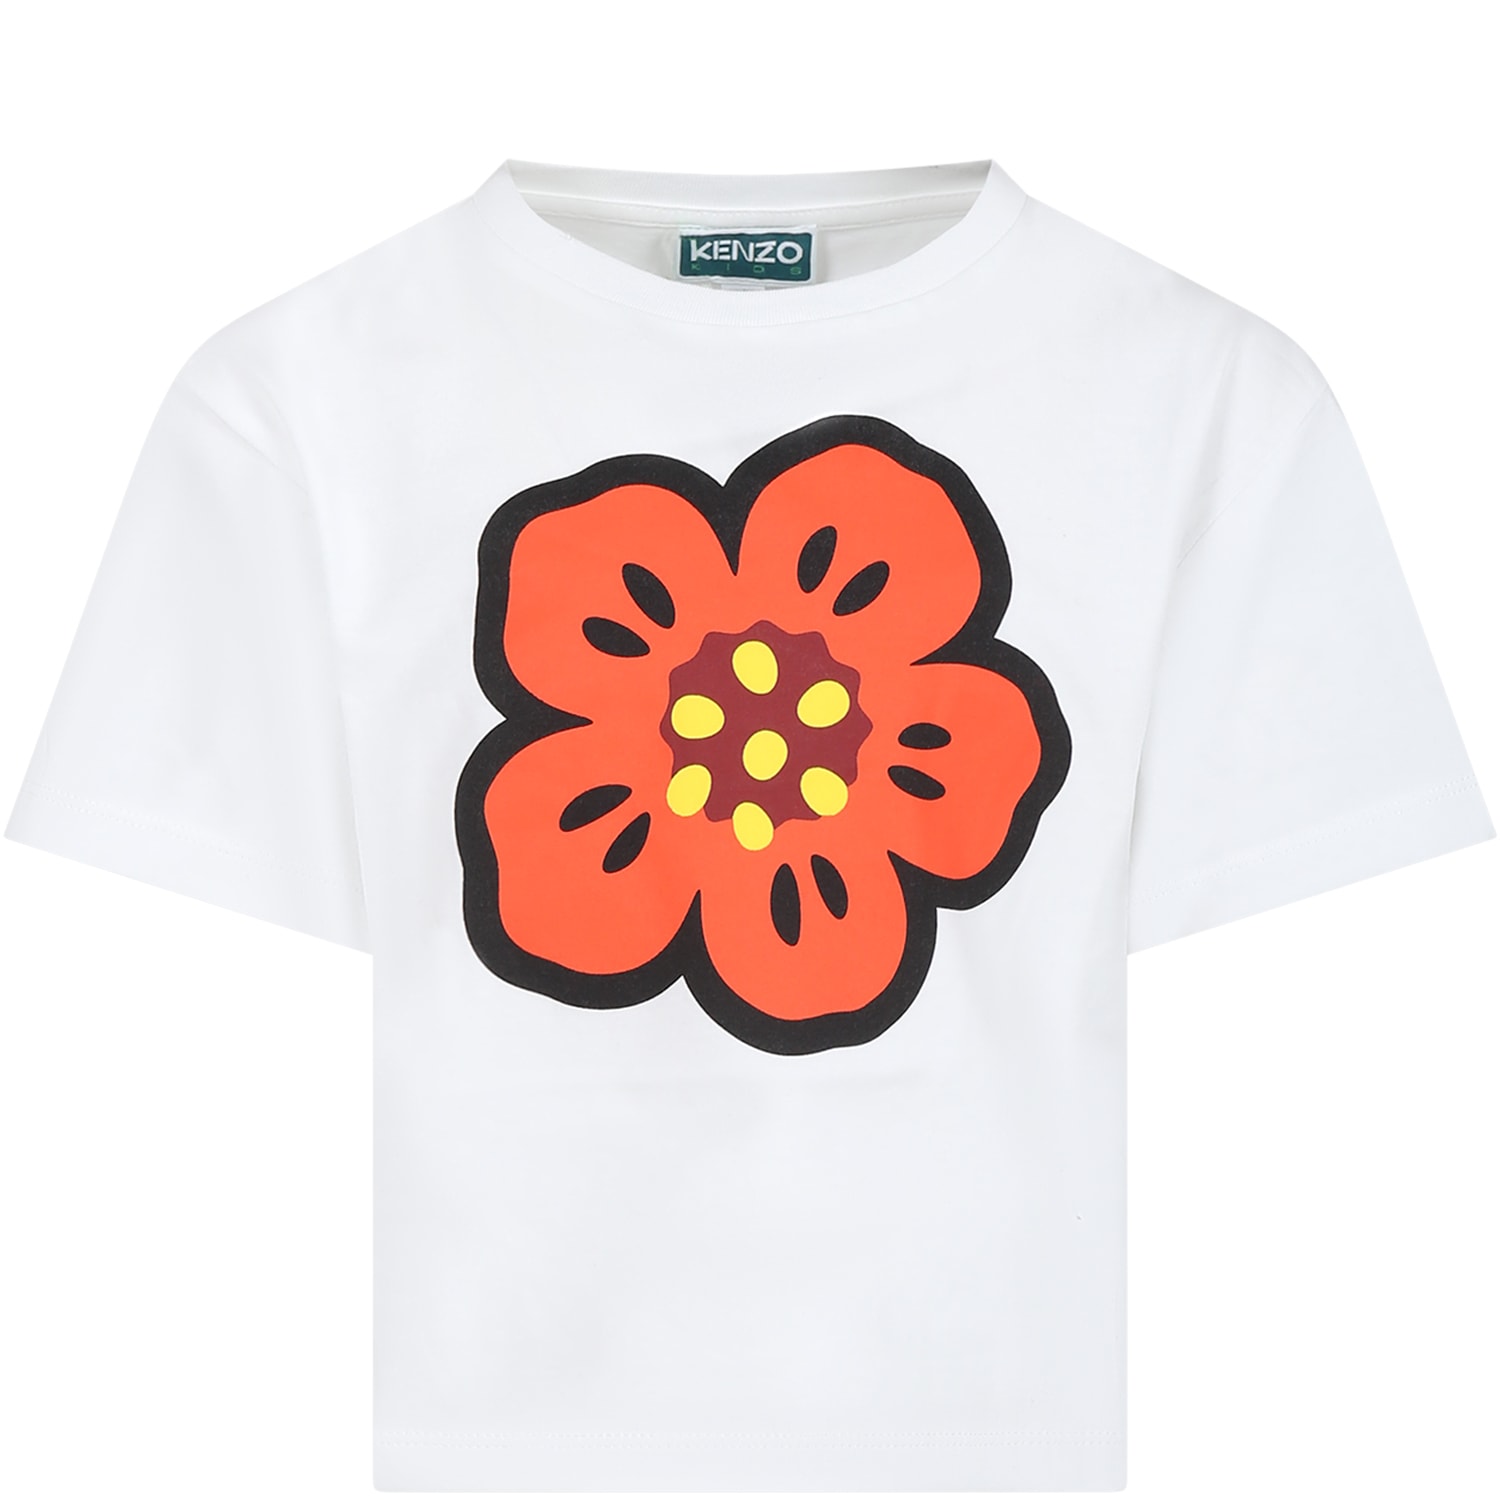 KENZO WHITE T-SHIRT FOR CHILDREN WITH FLOWER PRINT